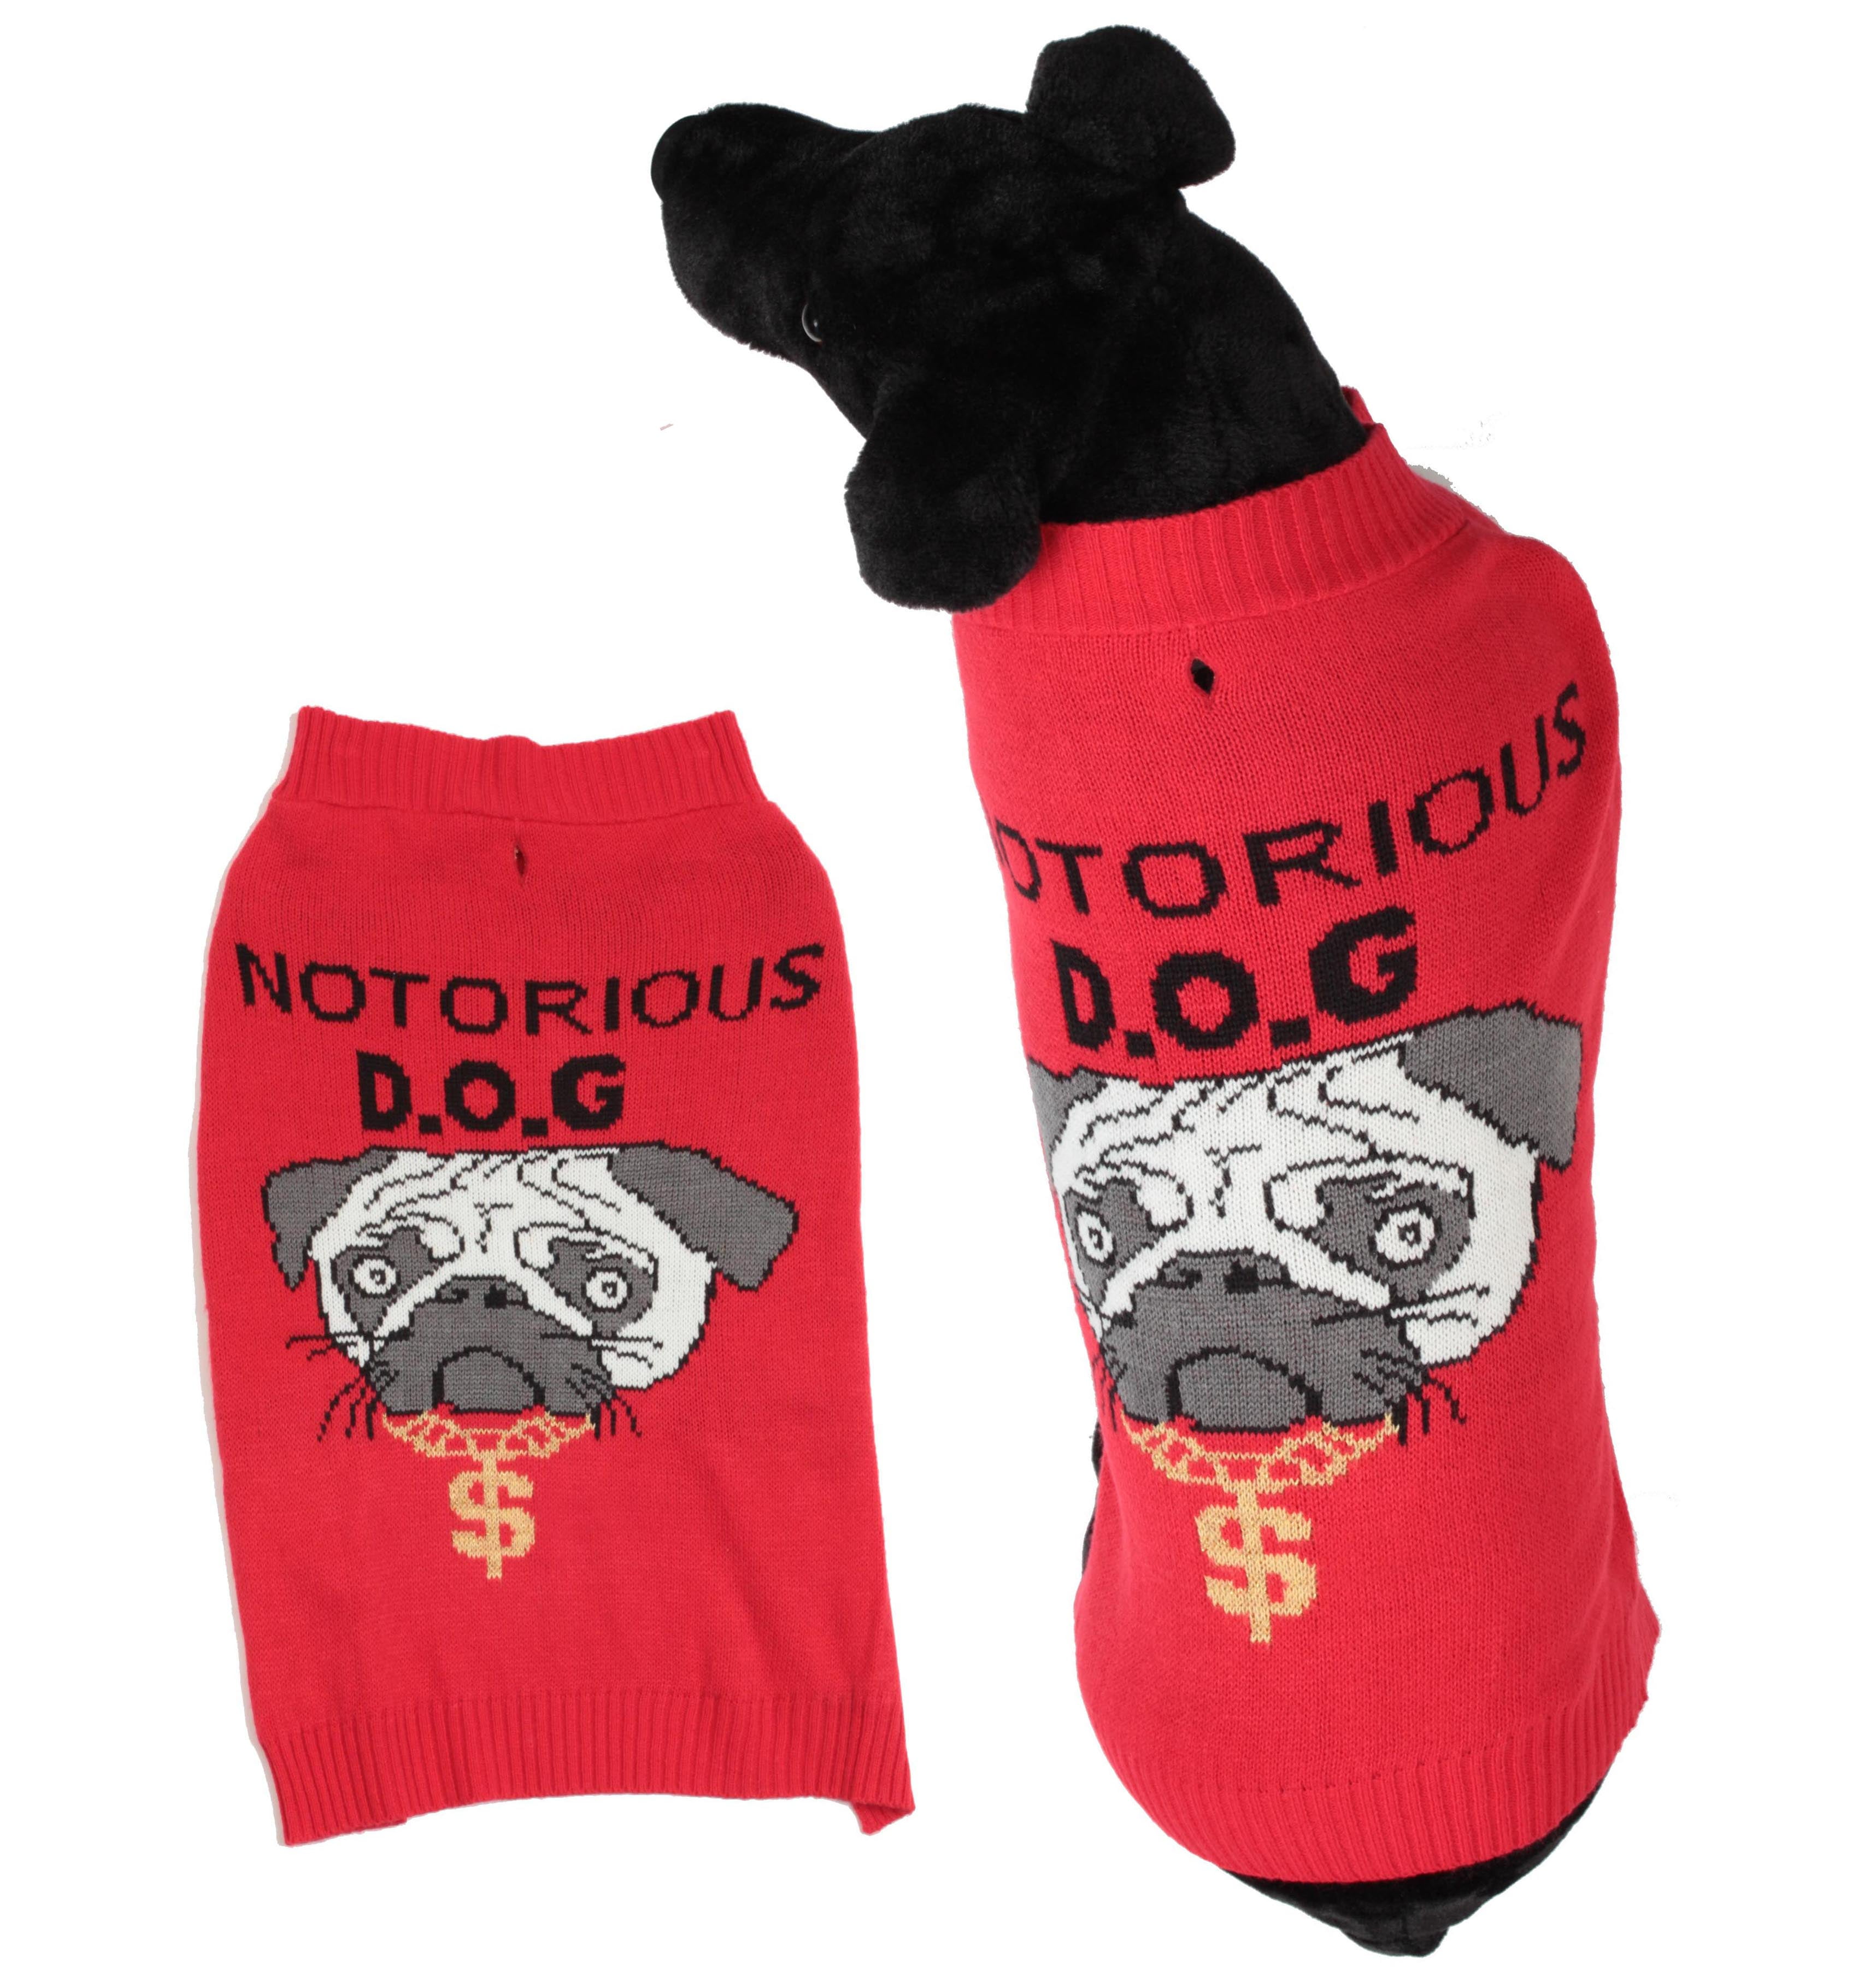 Mini Paw Print Knit Long Sleeve Shirt Dog Puppy Pet Clothes XXXS X Small